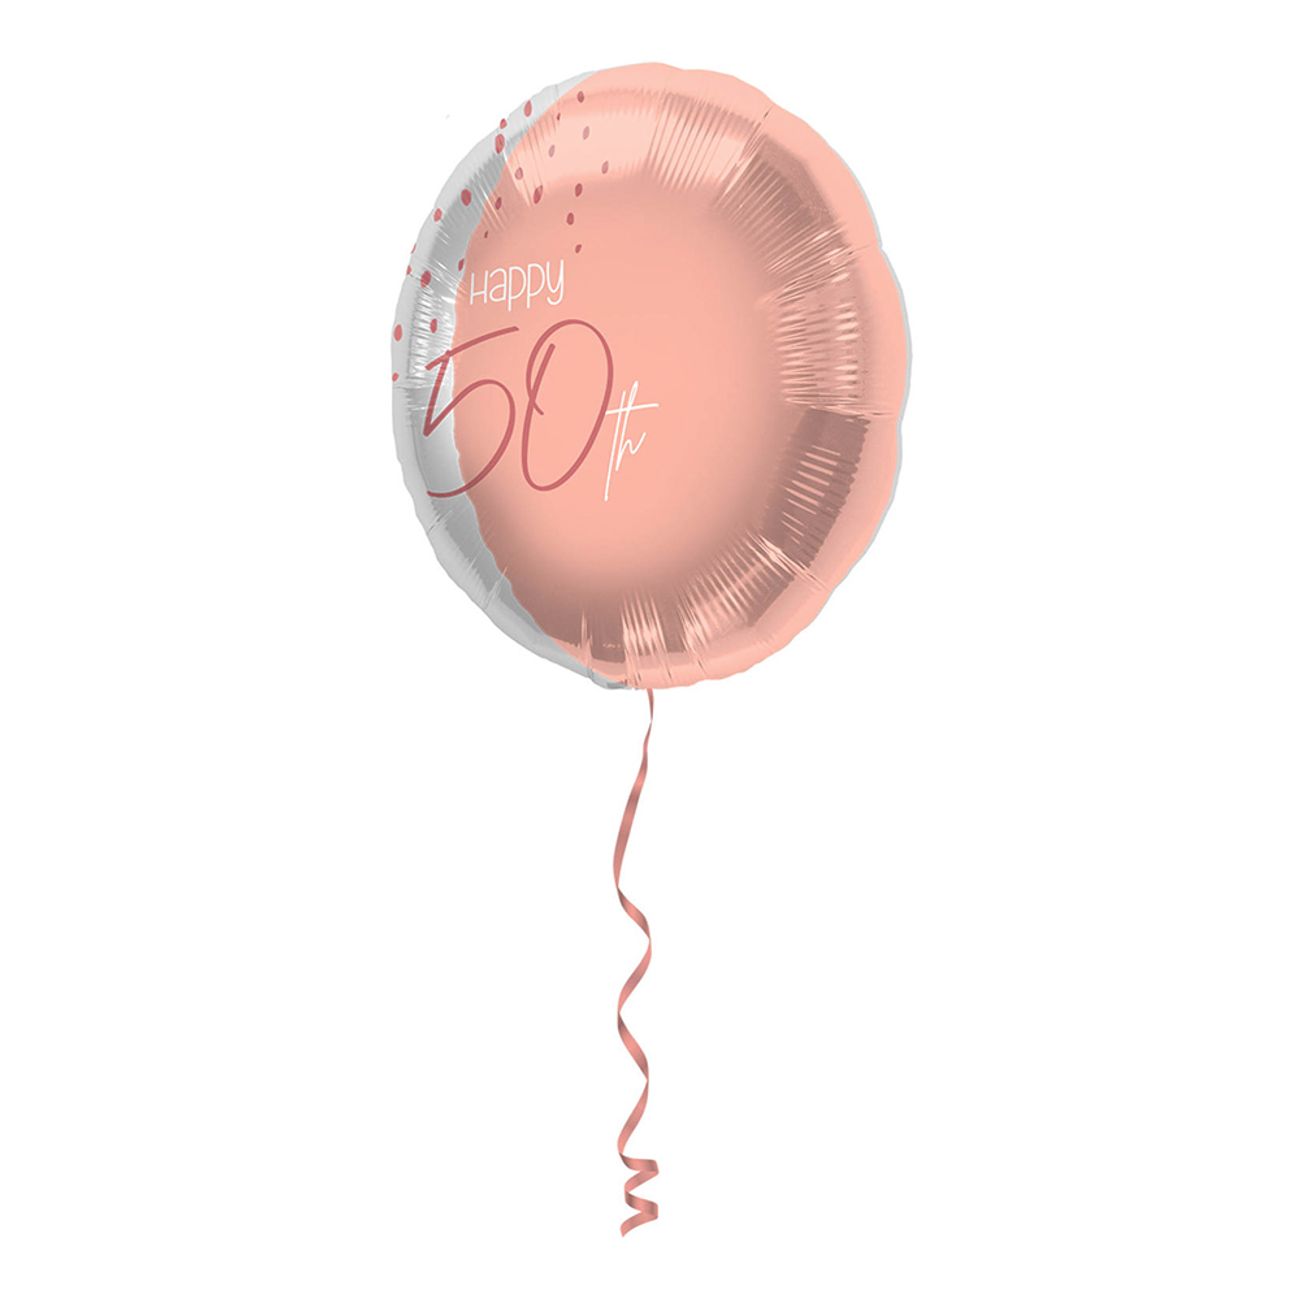 folieballong-happy-50th-lush-blush-1